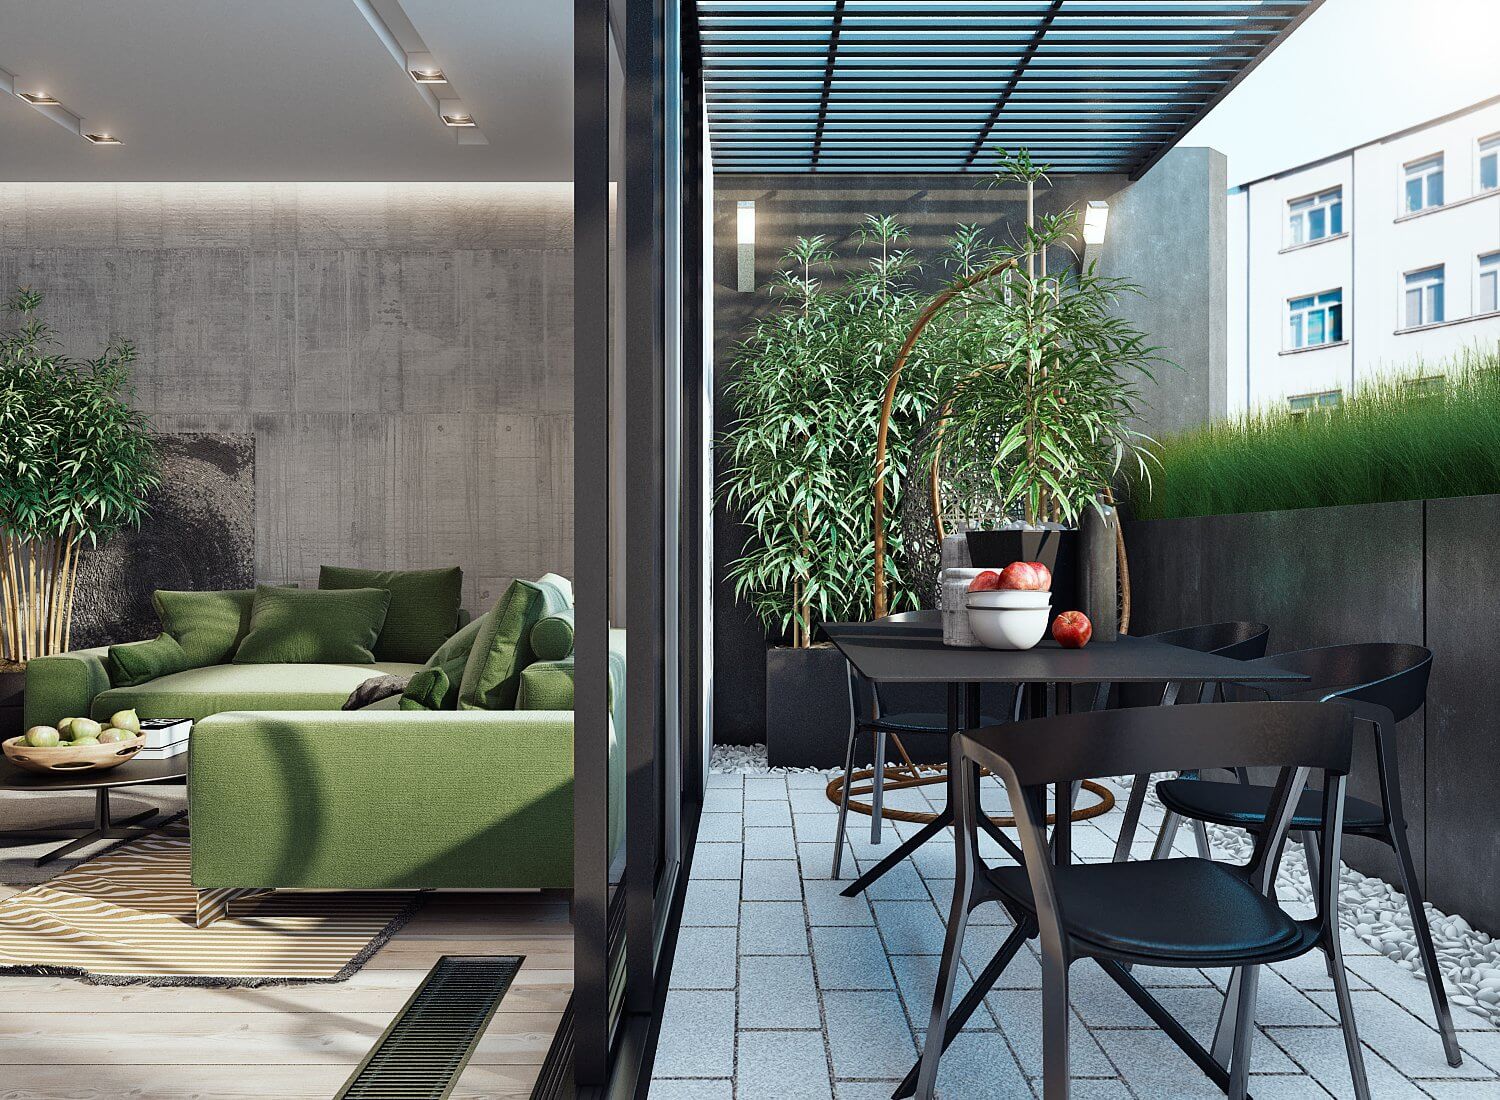 Stylish cozy apartment in italy living room balcony - cgi visualization